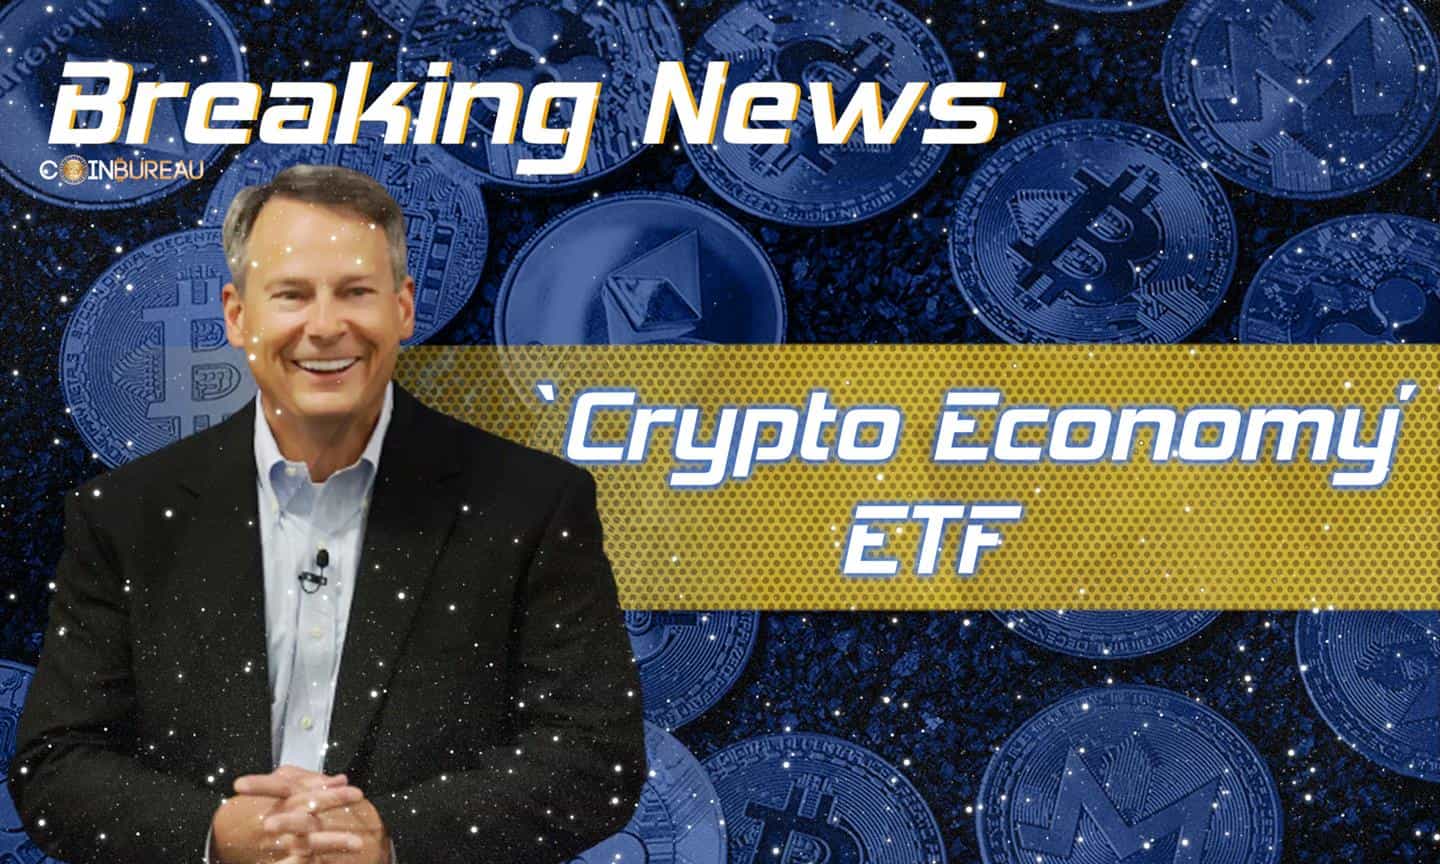 Investment Titan Charles Schwab Files for ‘Crypto Economy’ ETF